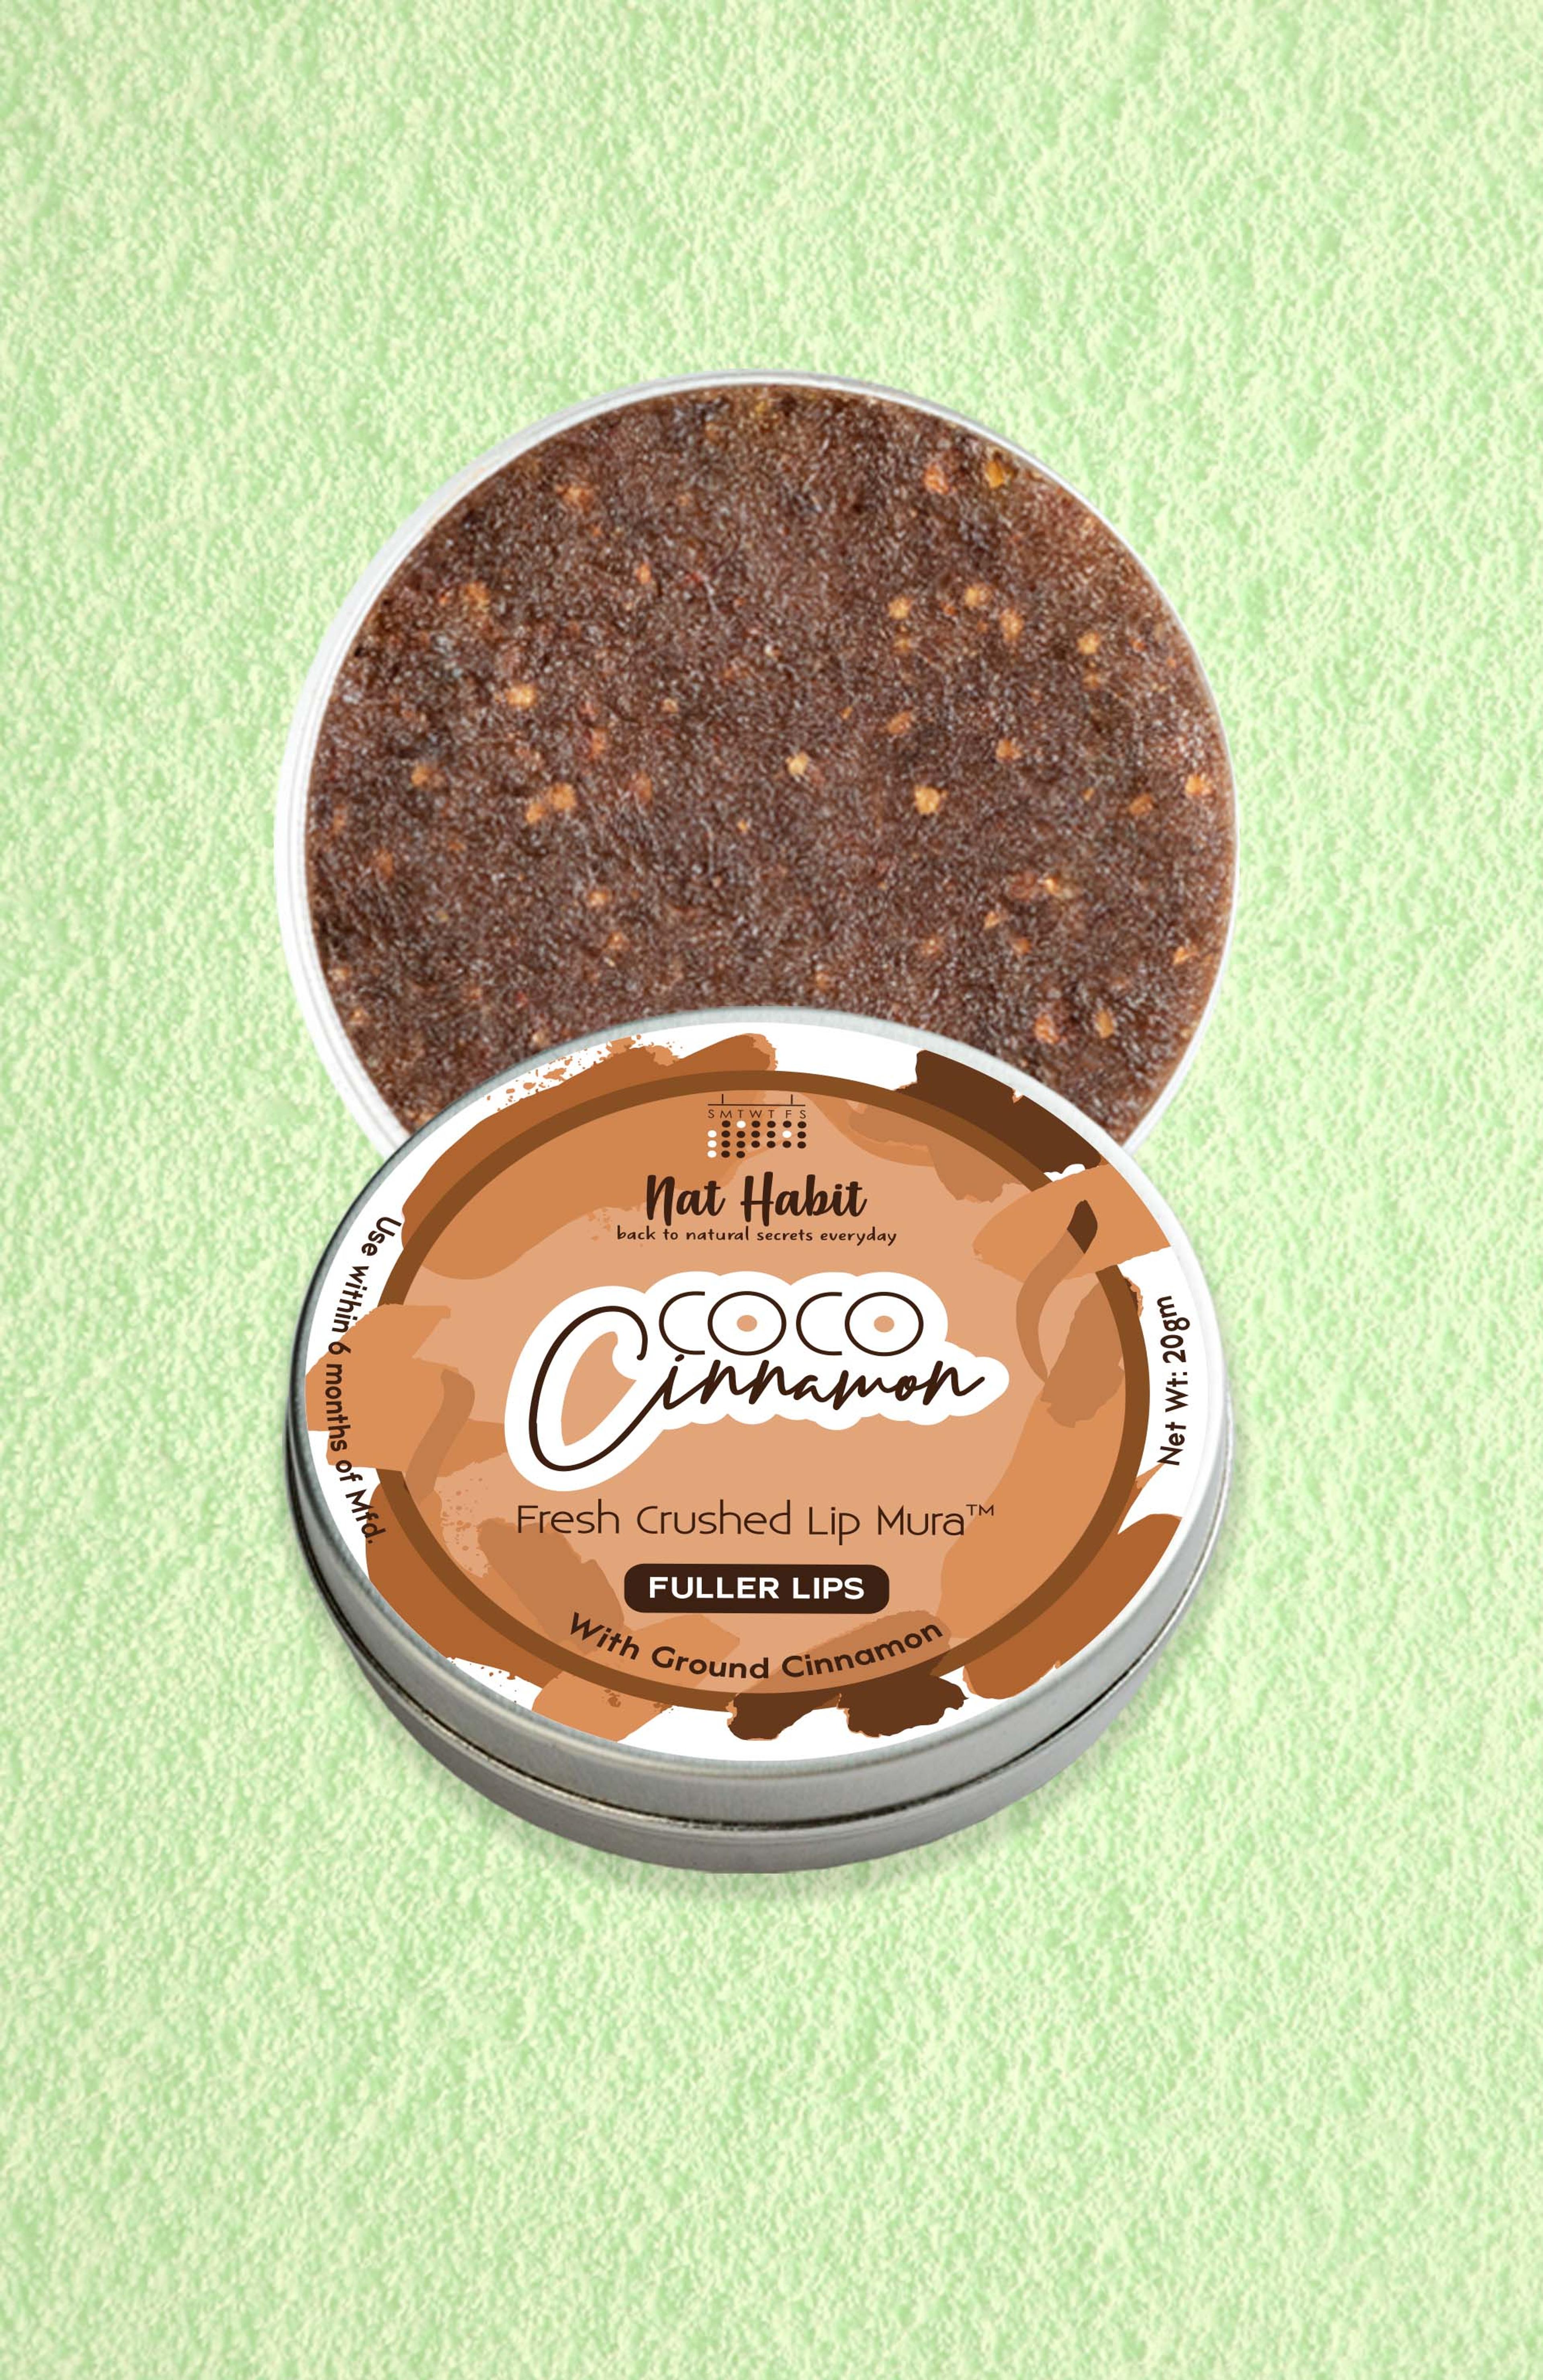 coco-cinnamon-first-image